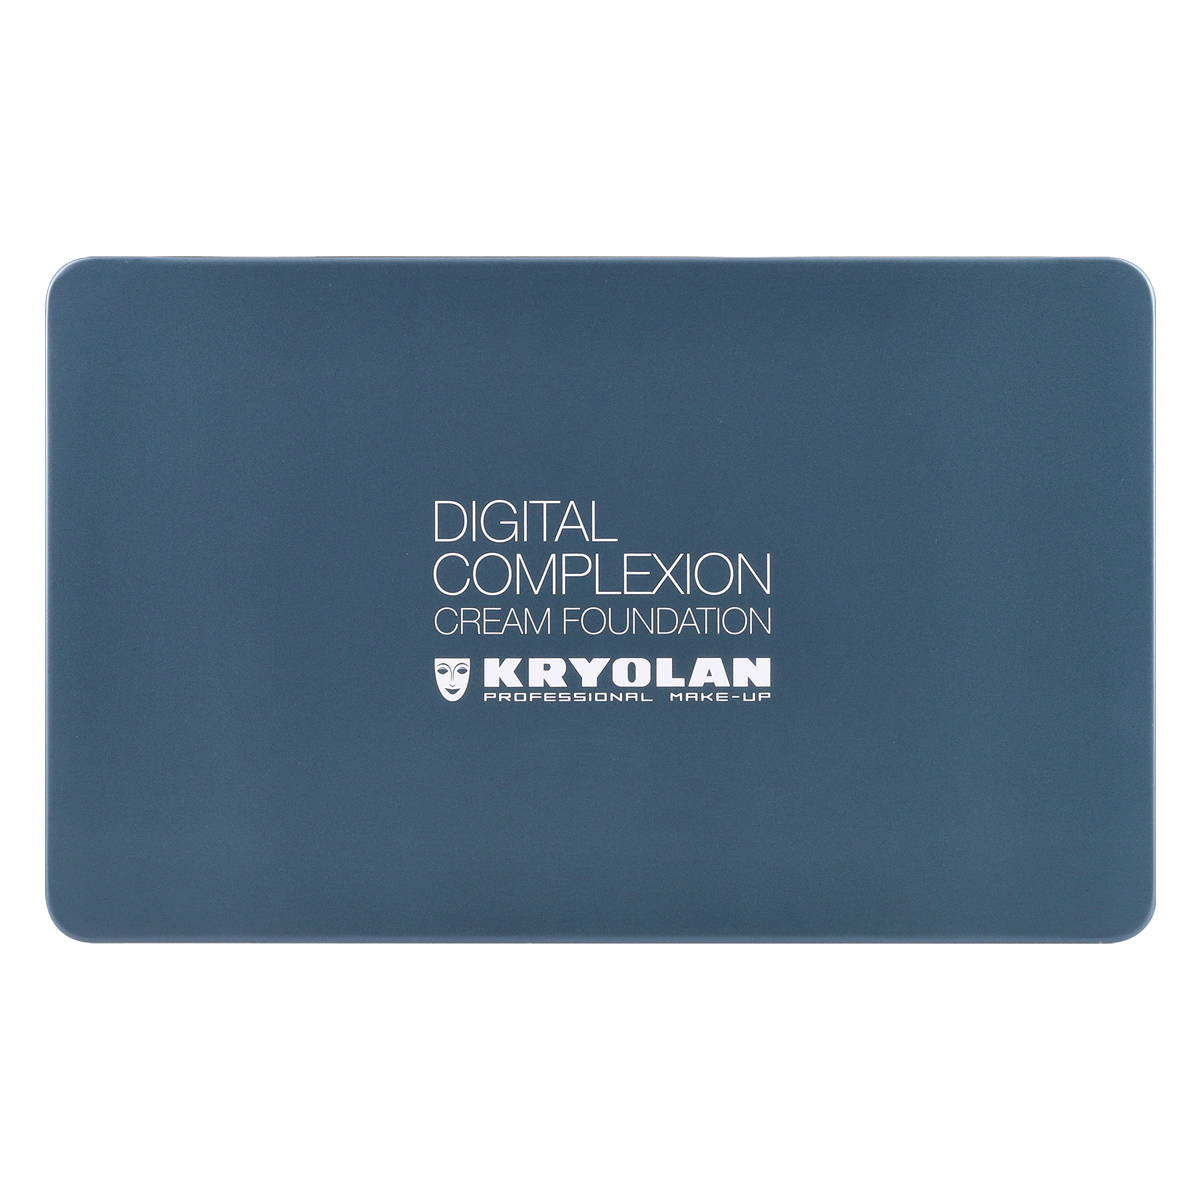 Digital 3 Complexion Cream Foundation